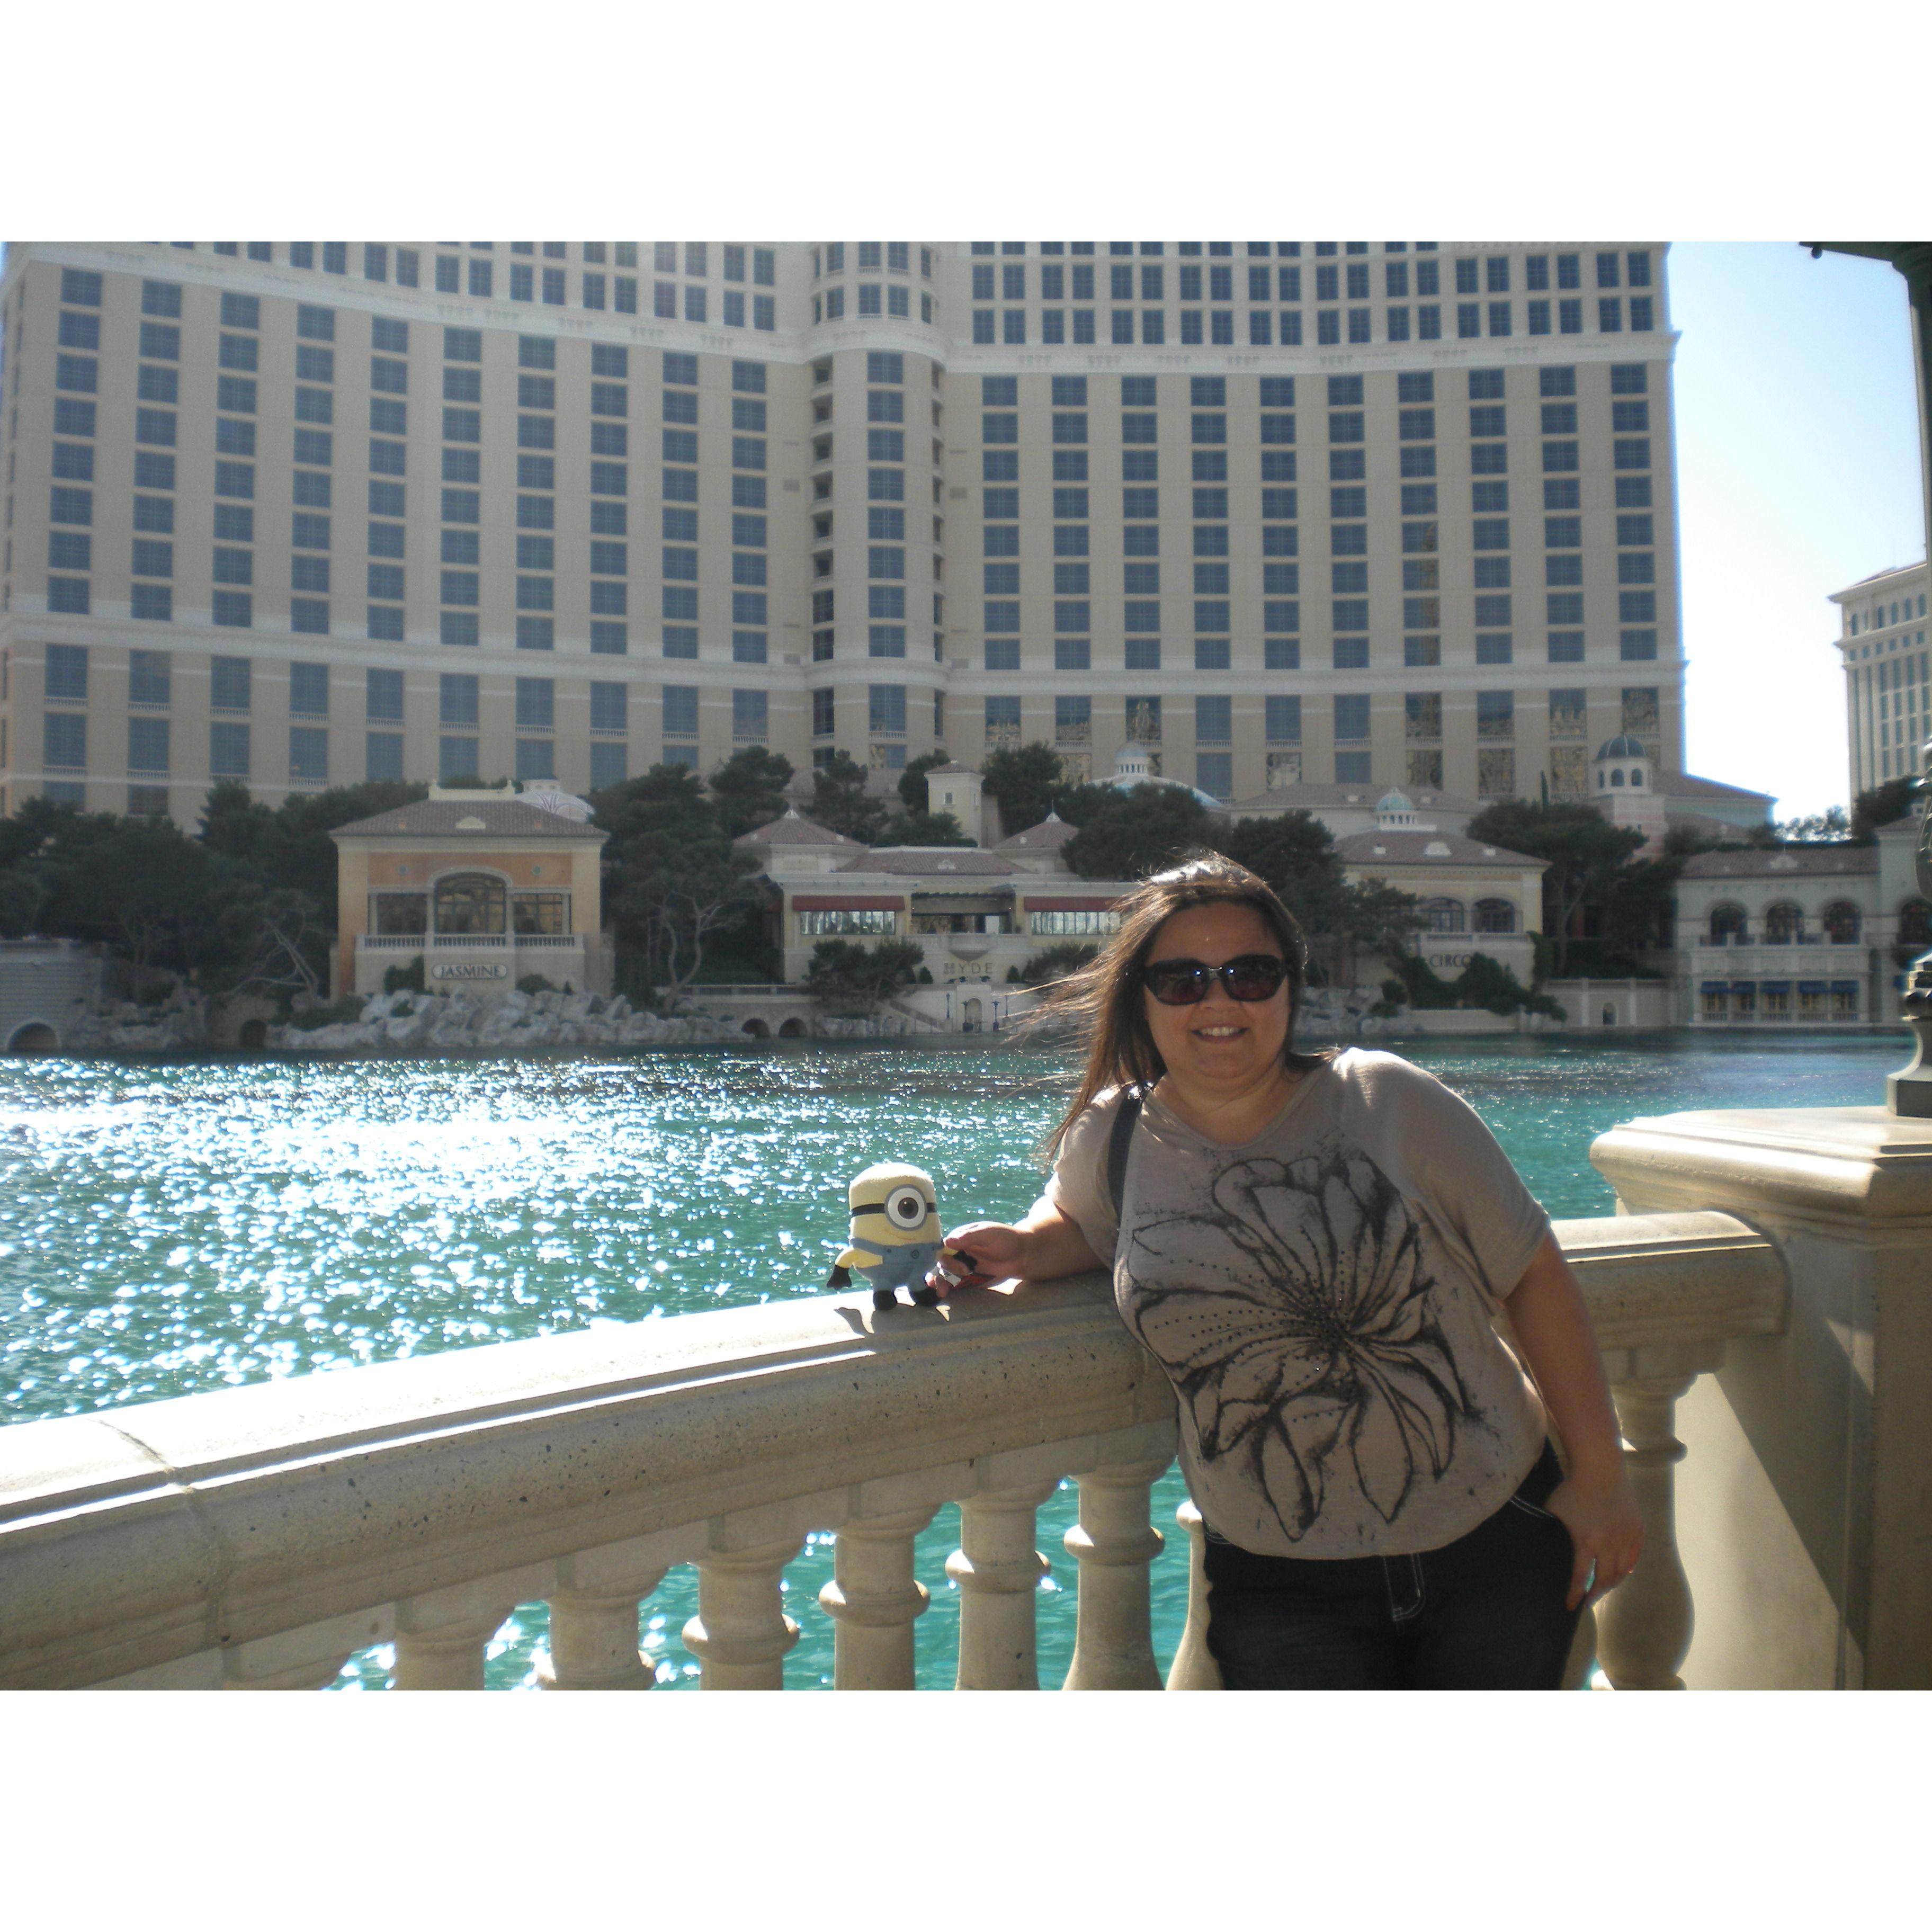 2012, Las Vegas, Bellagio